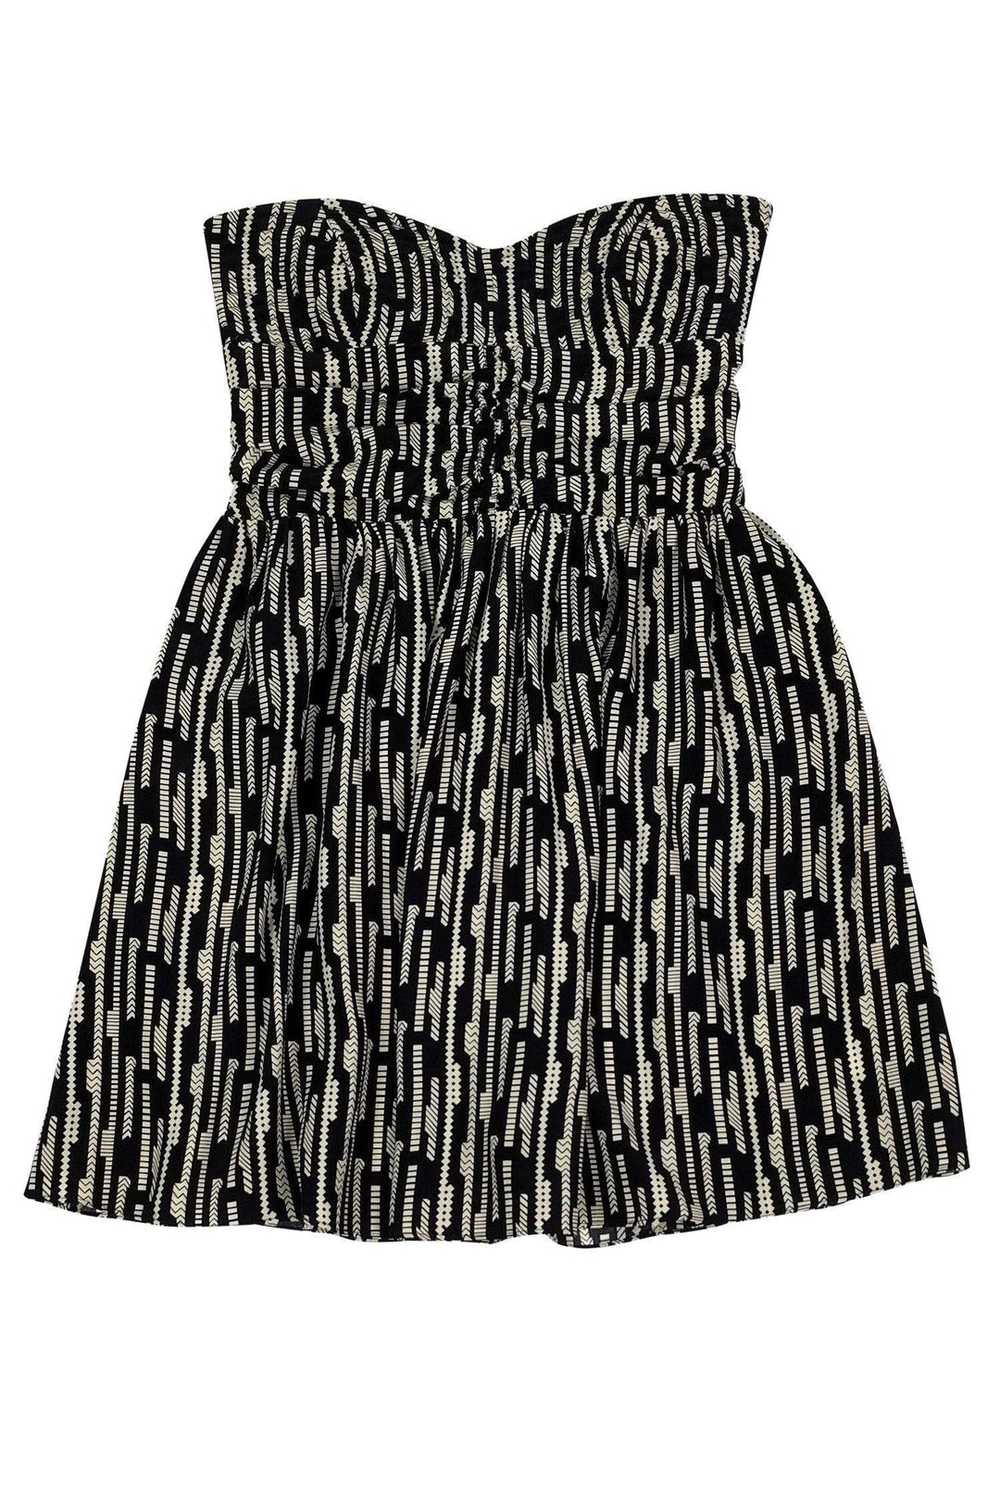 Parker - Black & White Strapless Dress Sz L - image 1